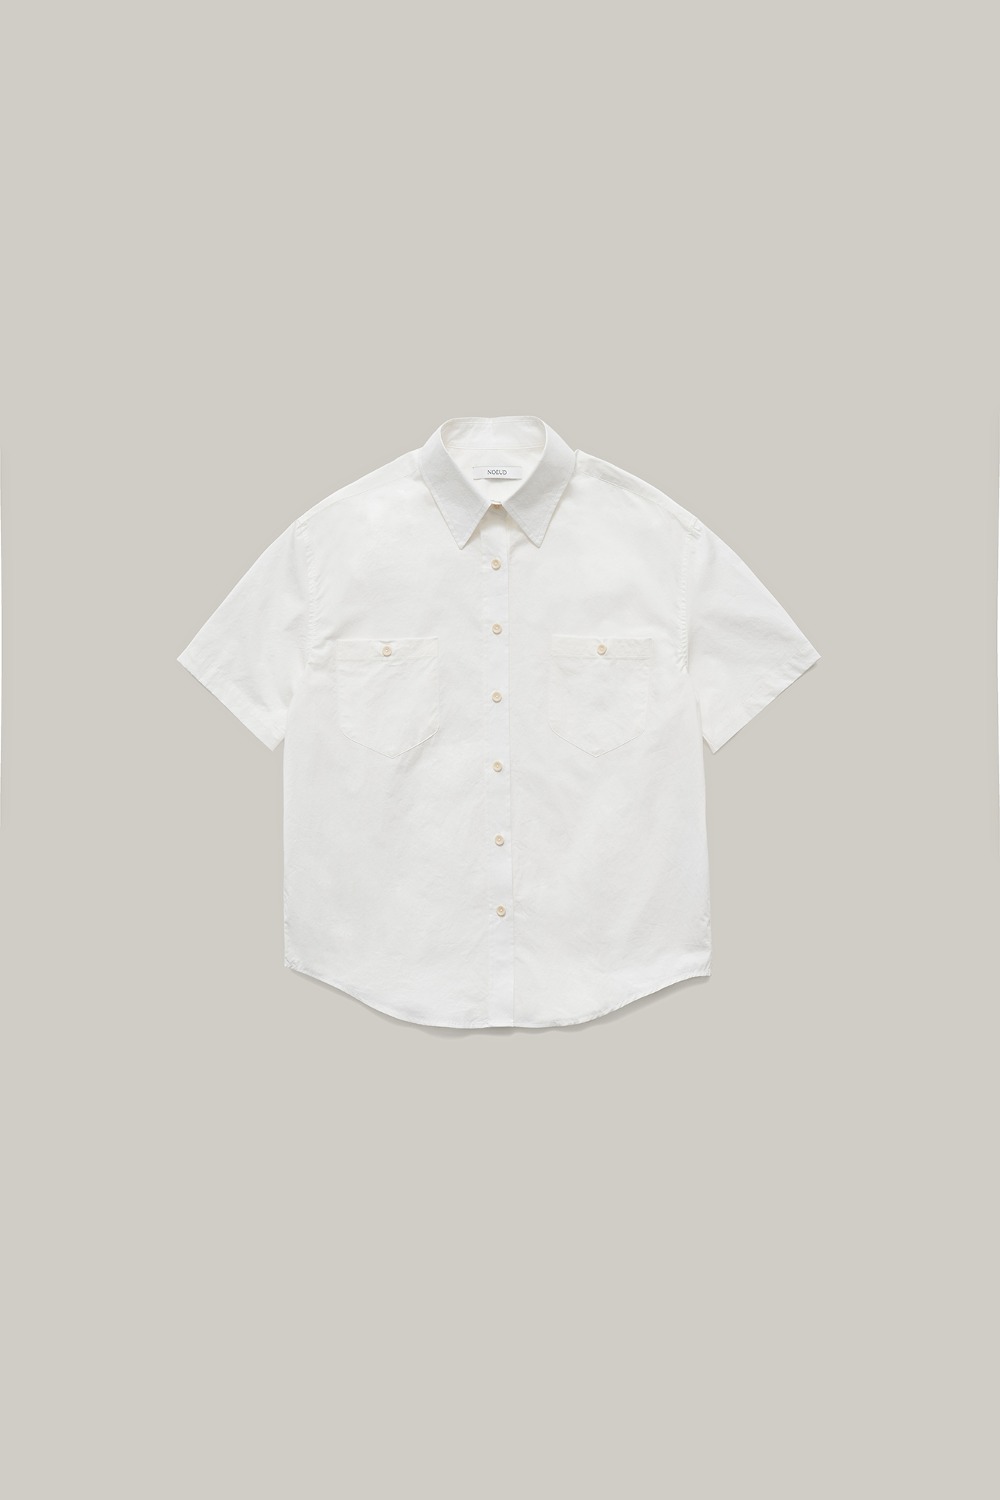 5th/Pocket cotton shirt (Ivory)